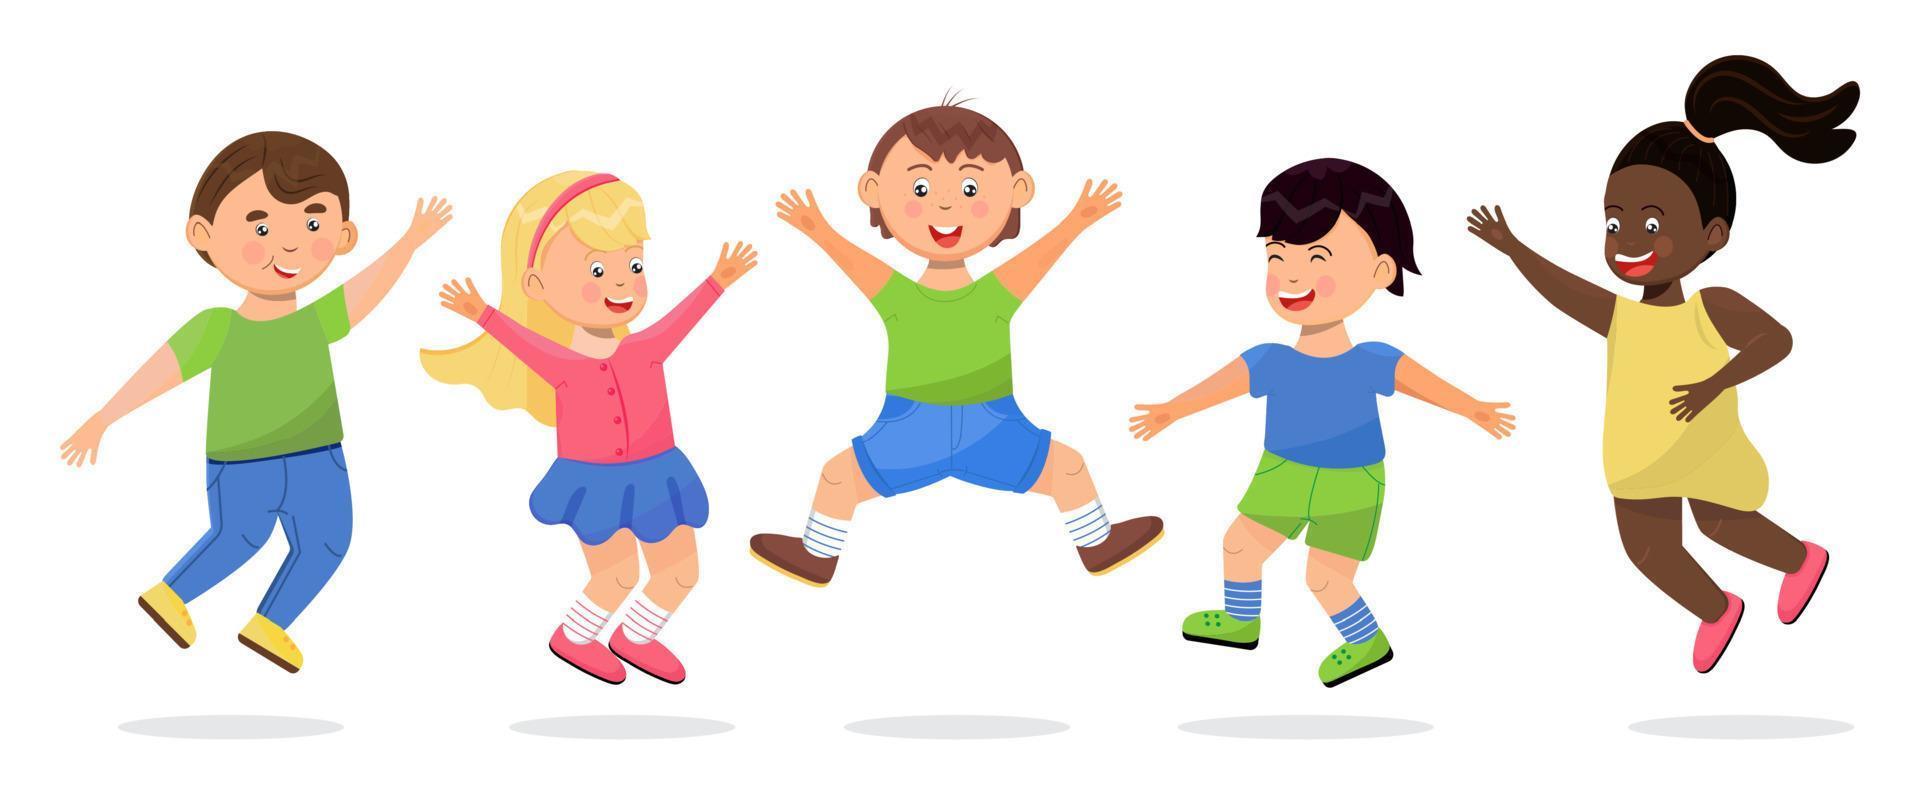 Happy school kids jumping. Cartoon children has fun, runs, jumps, plays. Boys and girls illustration vector isolated on white background. Diversity society, friendship, classmates